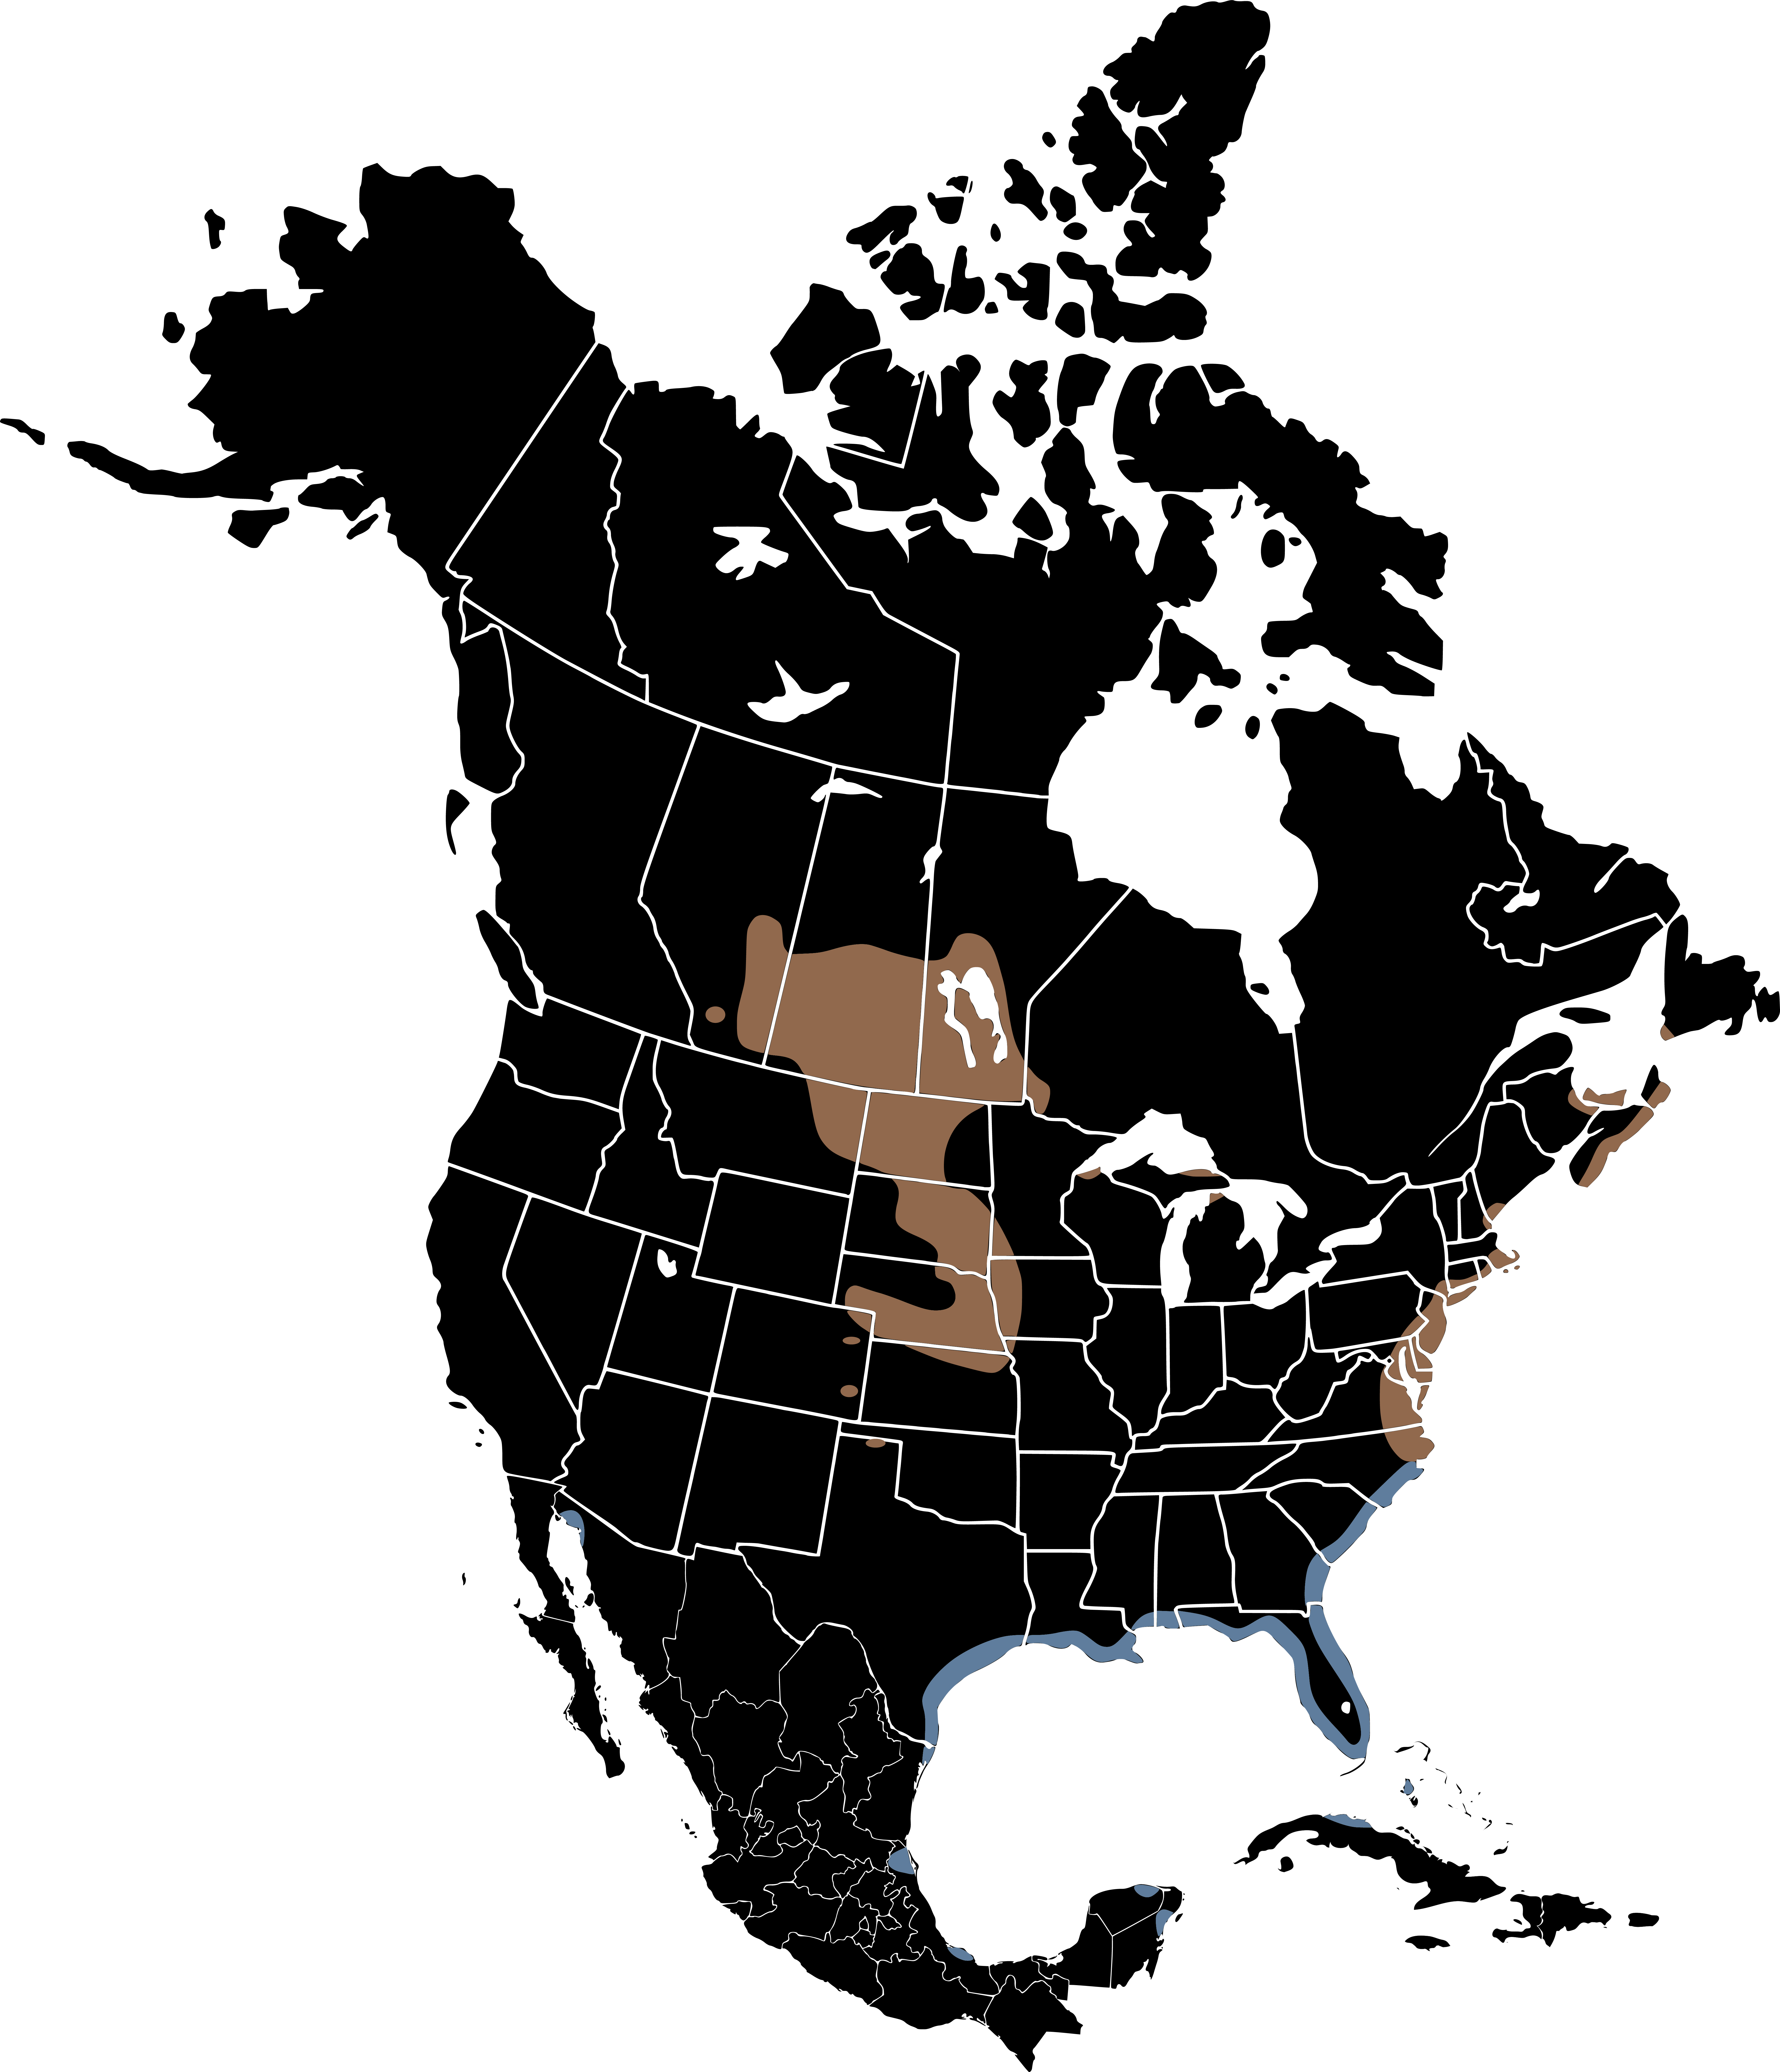 Plover Range in North American